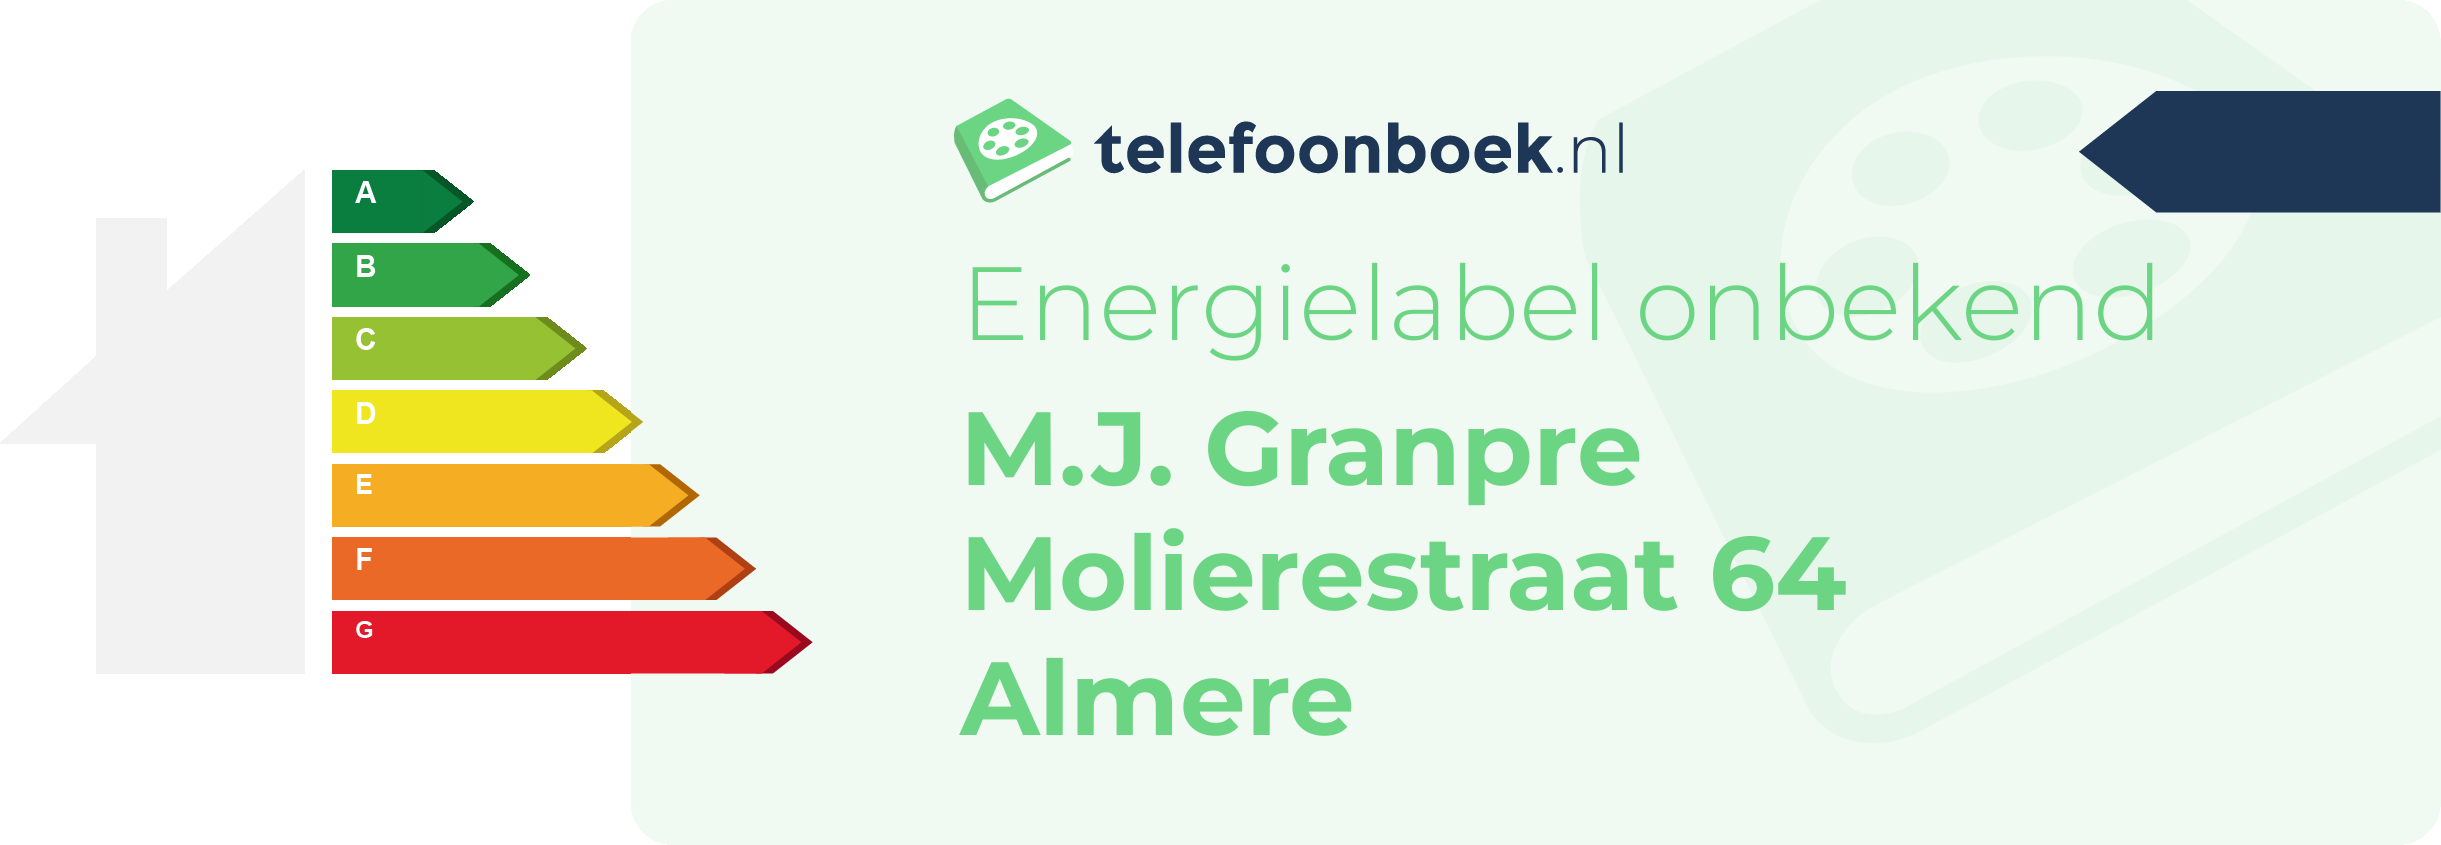 Energielabel M.J. Granpre Molierestraat 64 Almere